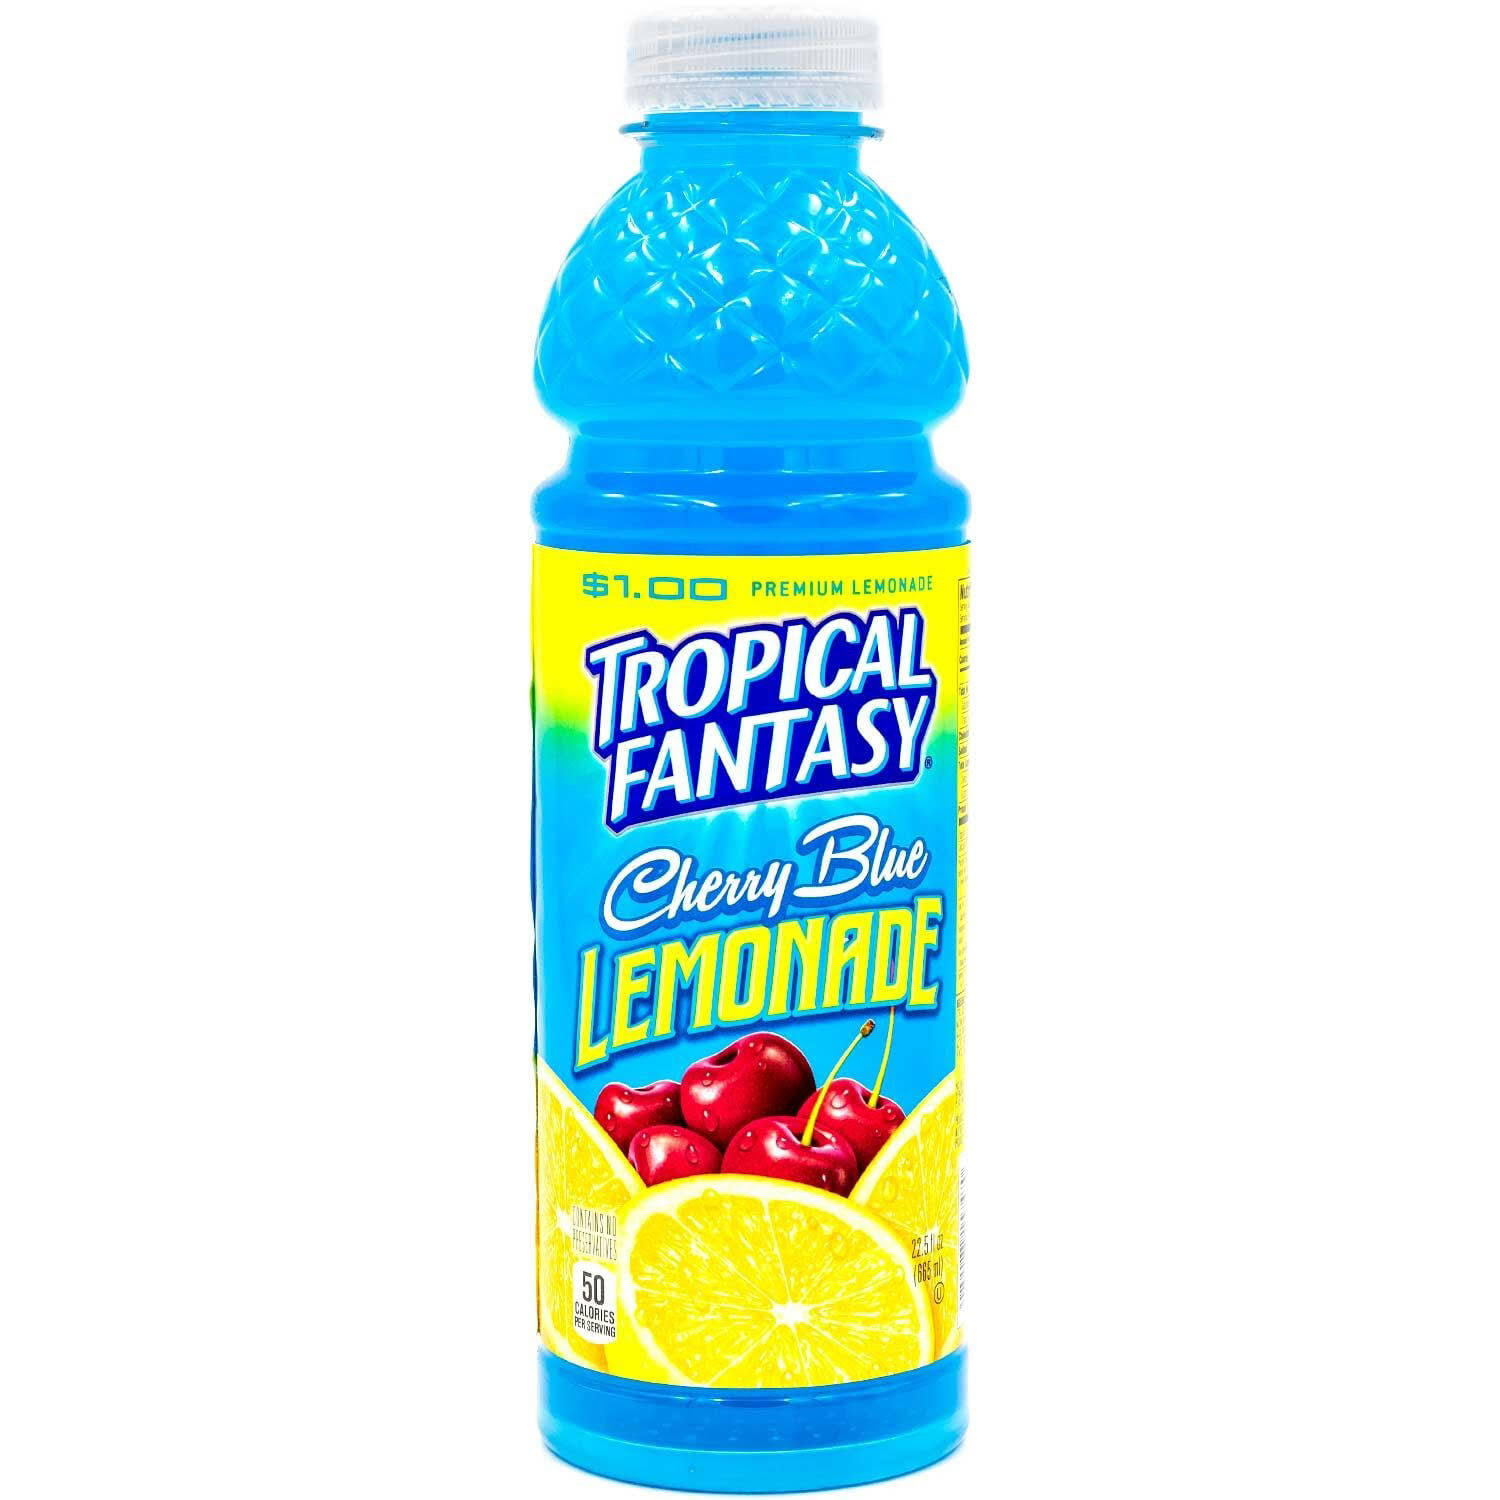 Reggae Imports Tropical Fantasy Premium Lemonade - Cherry Blue